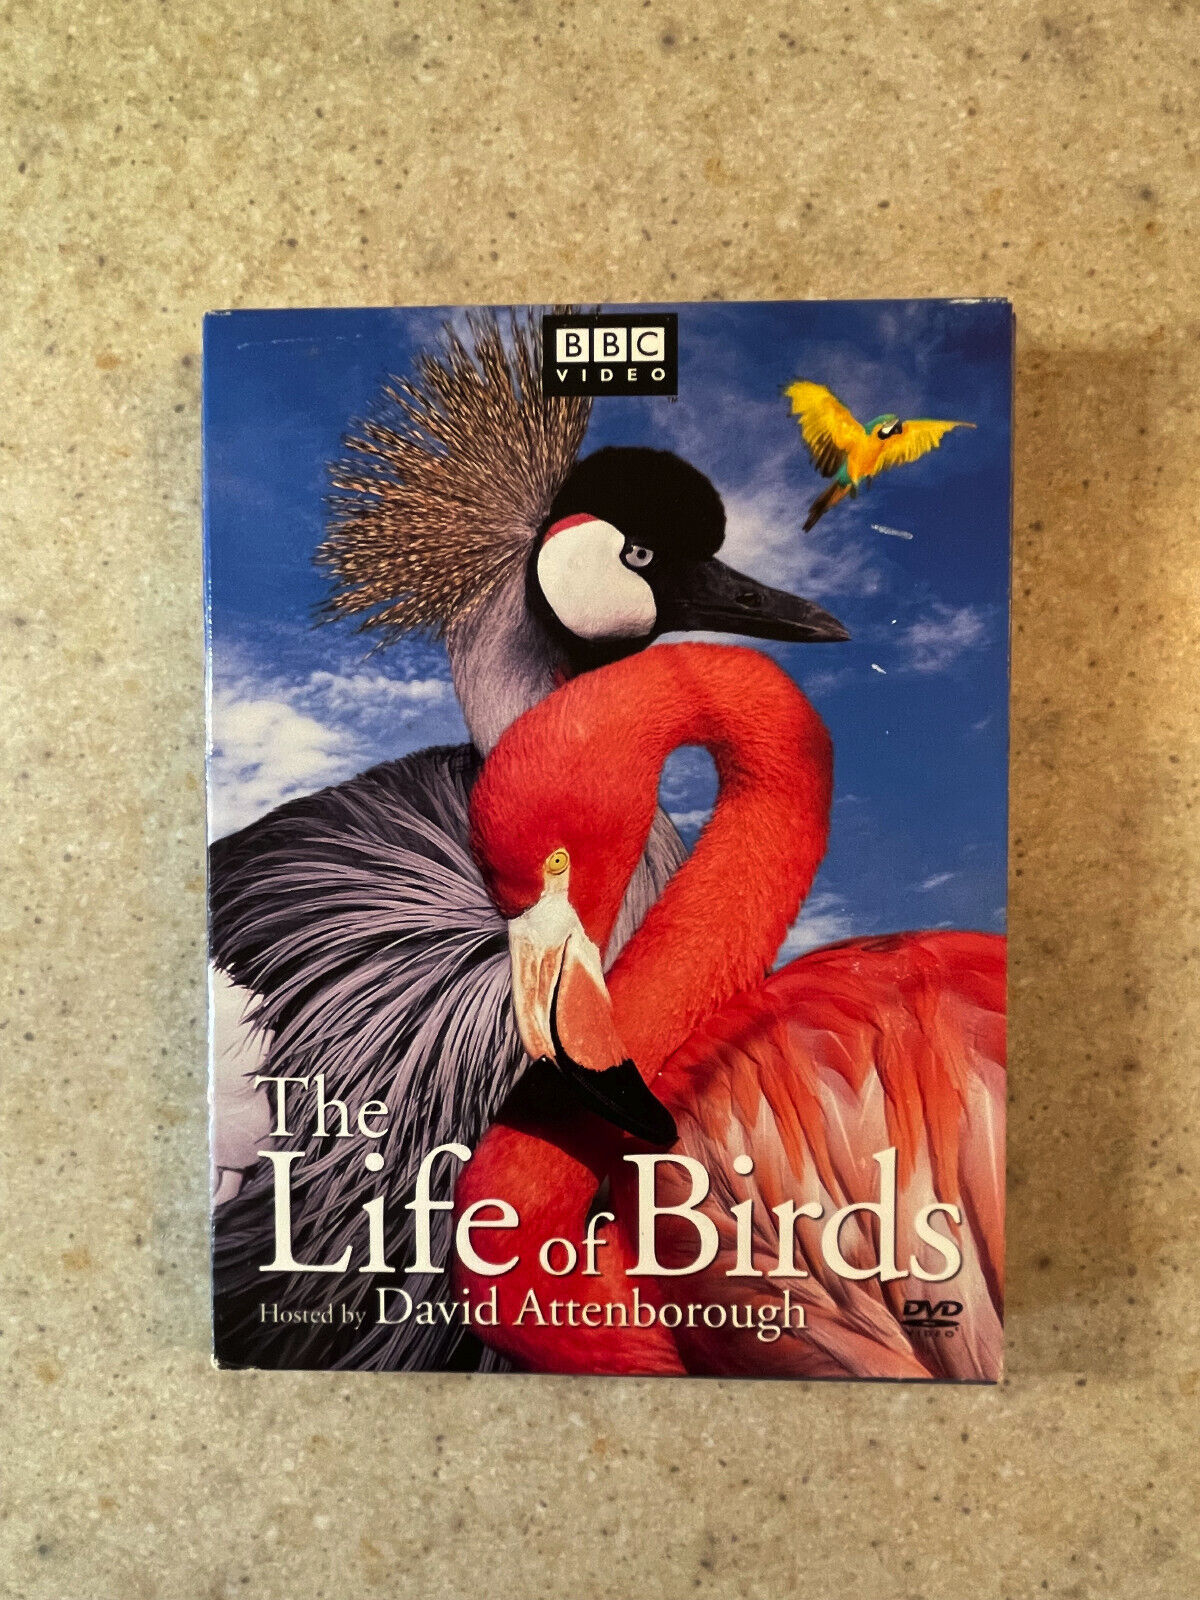 The Life of Birds (DVD, 2002, 3-Disc Set)